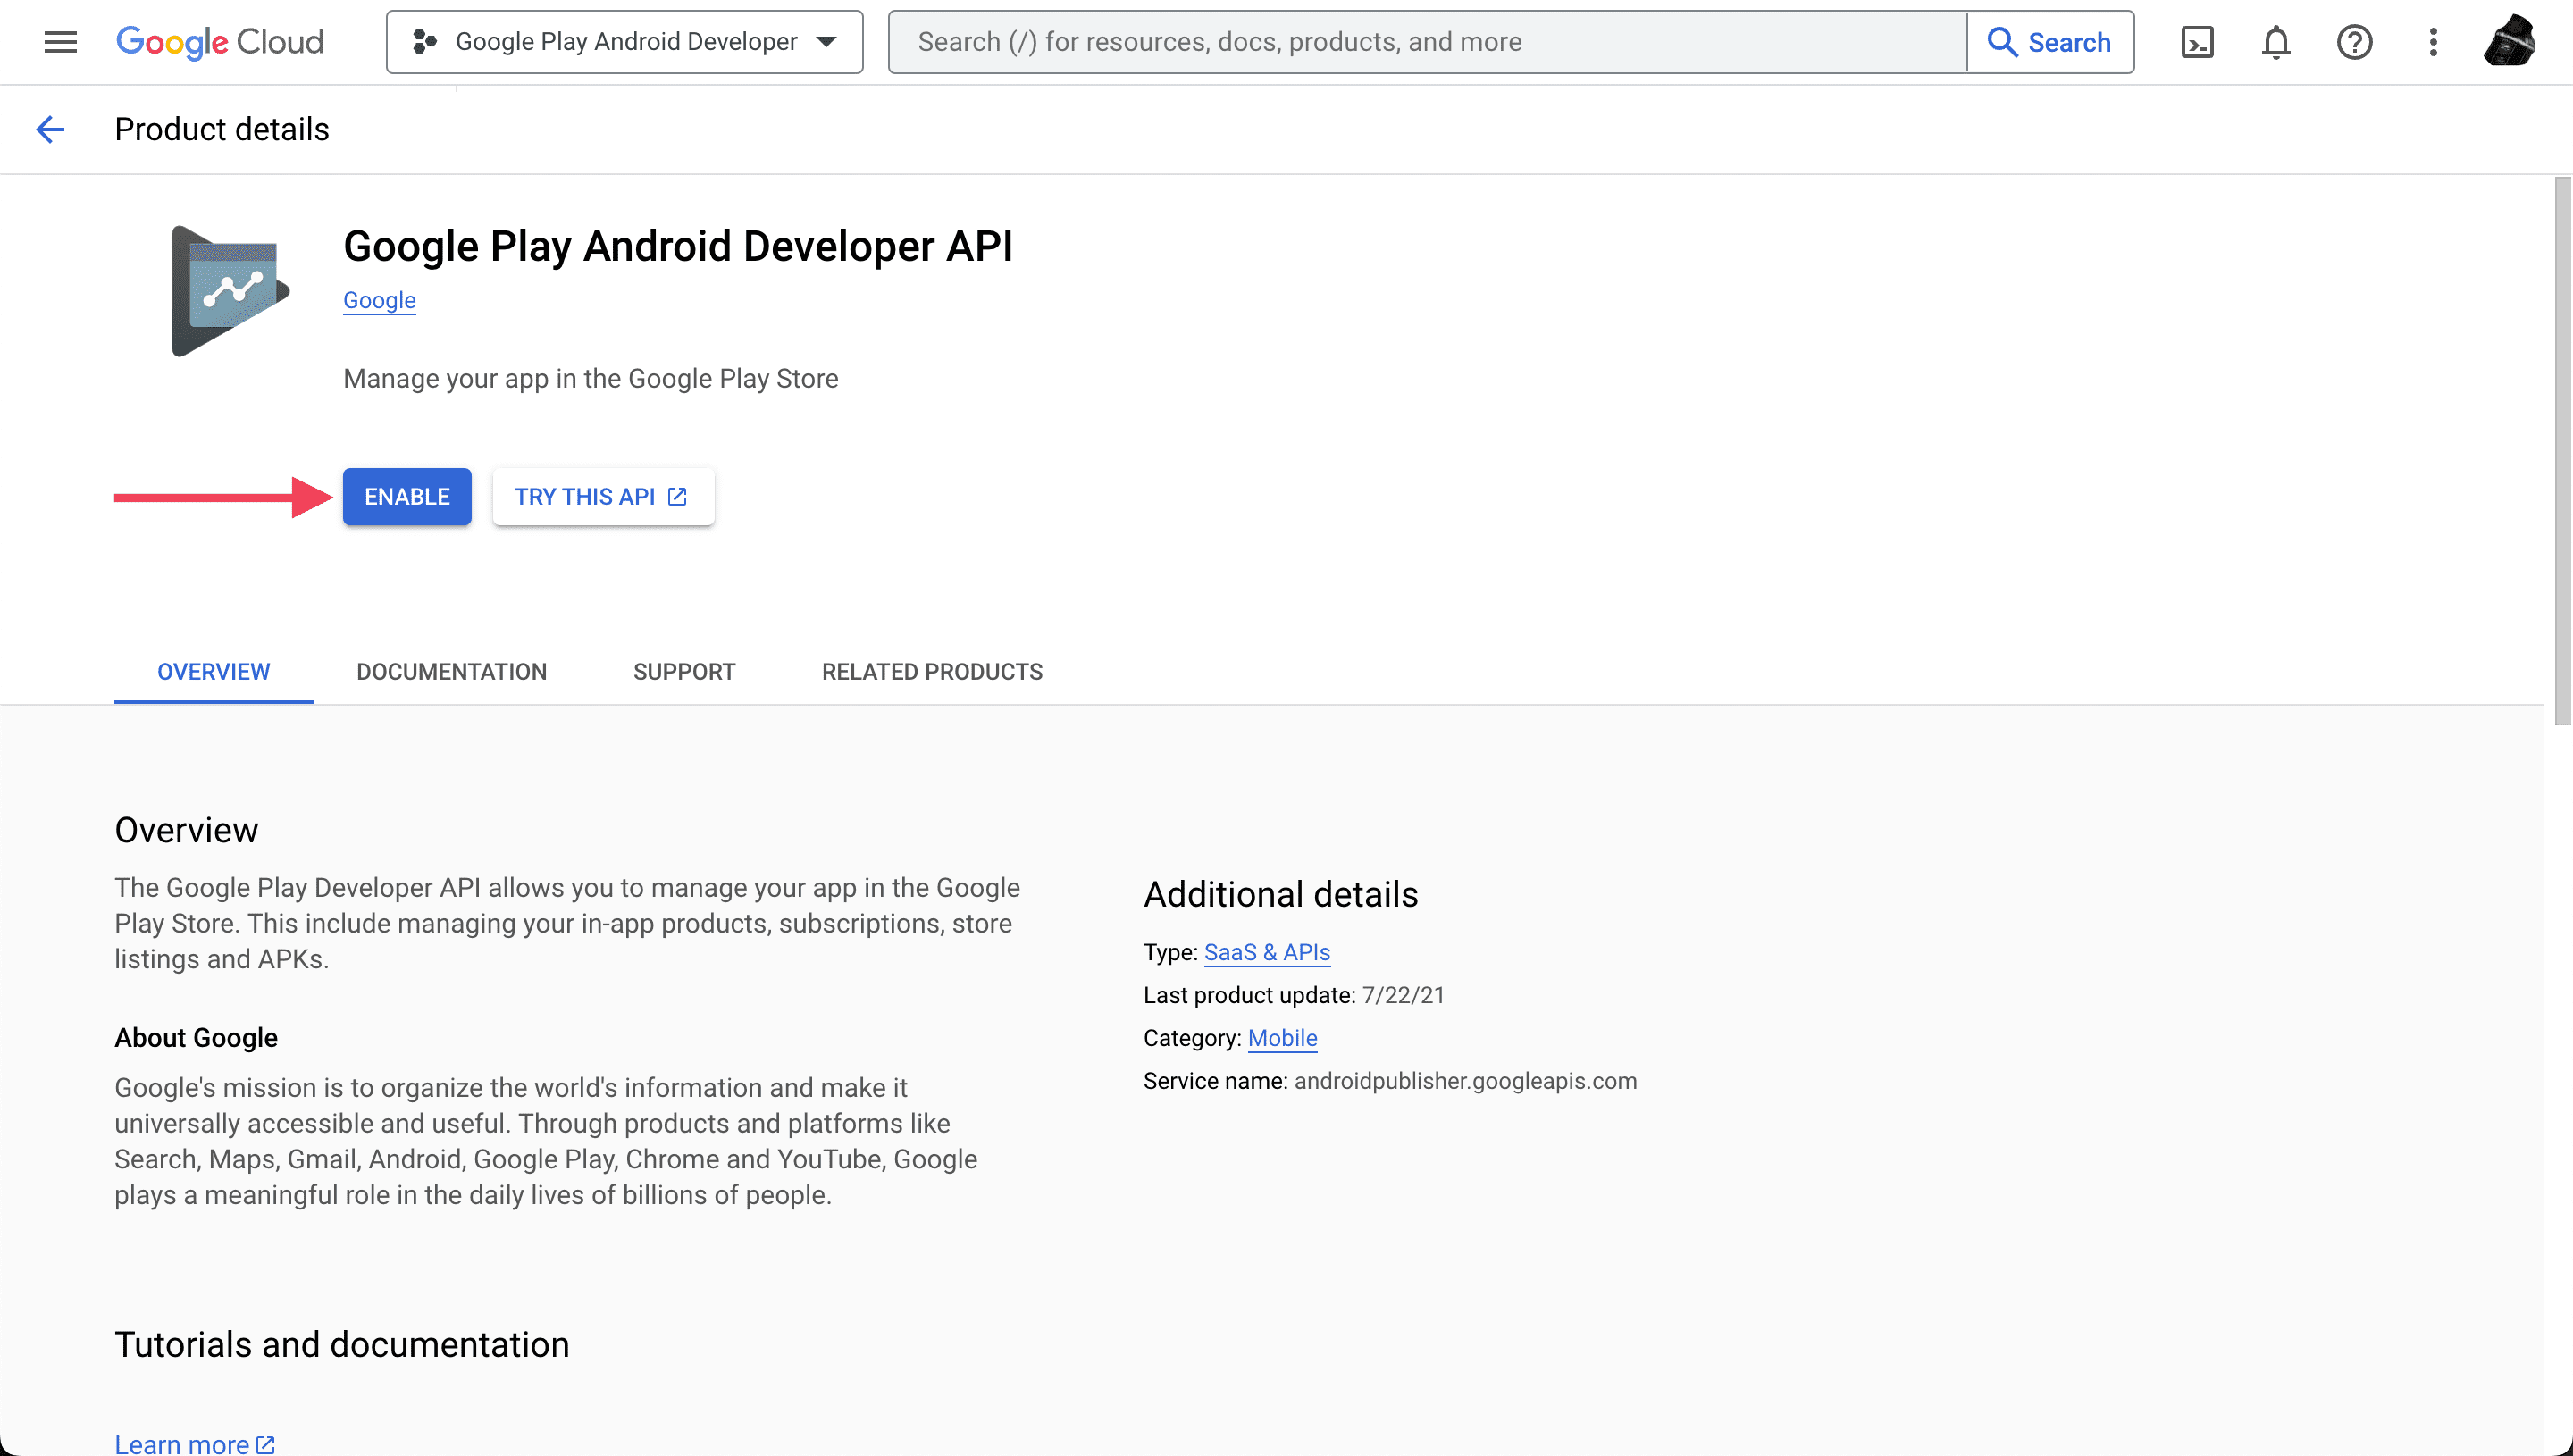 Google Play Android Developer API